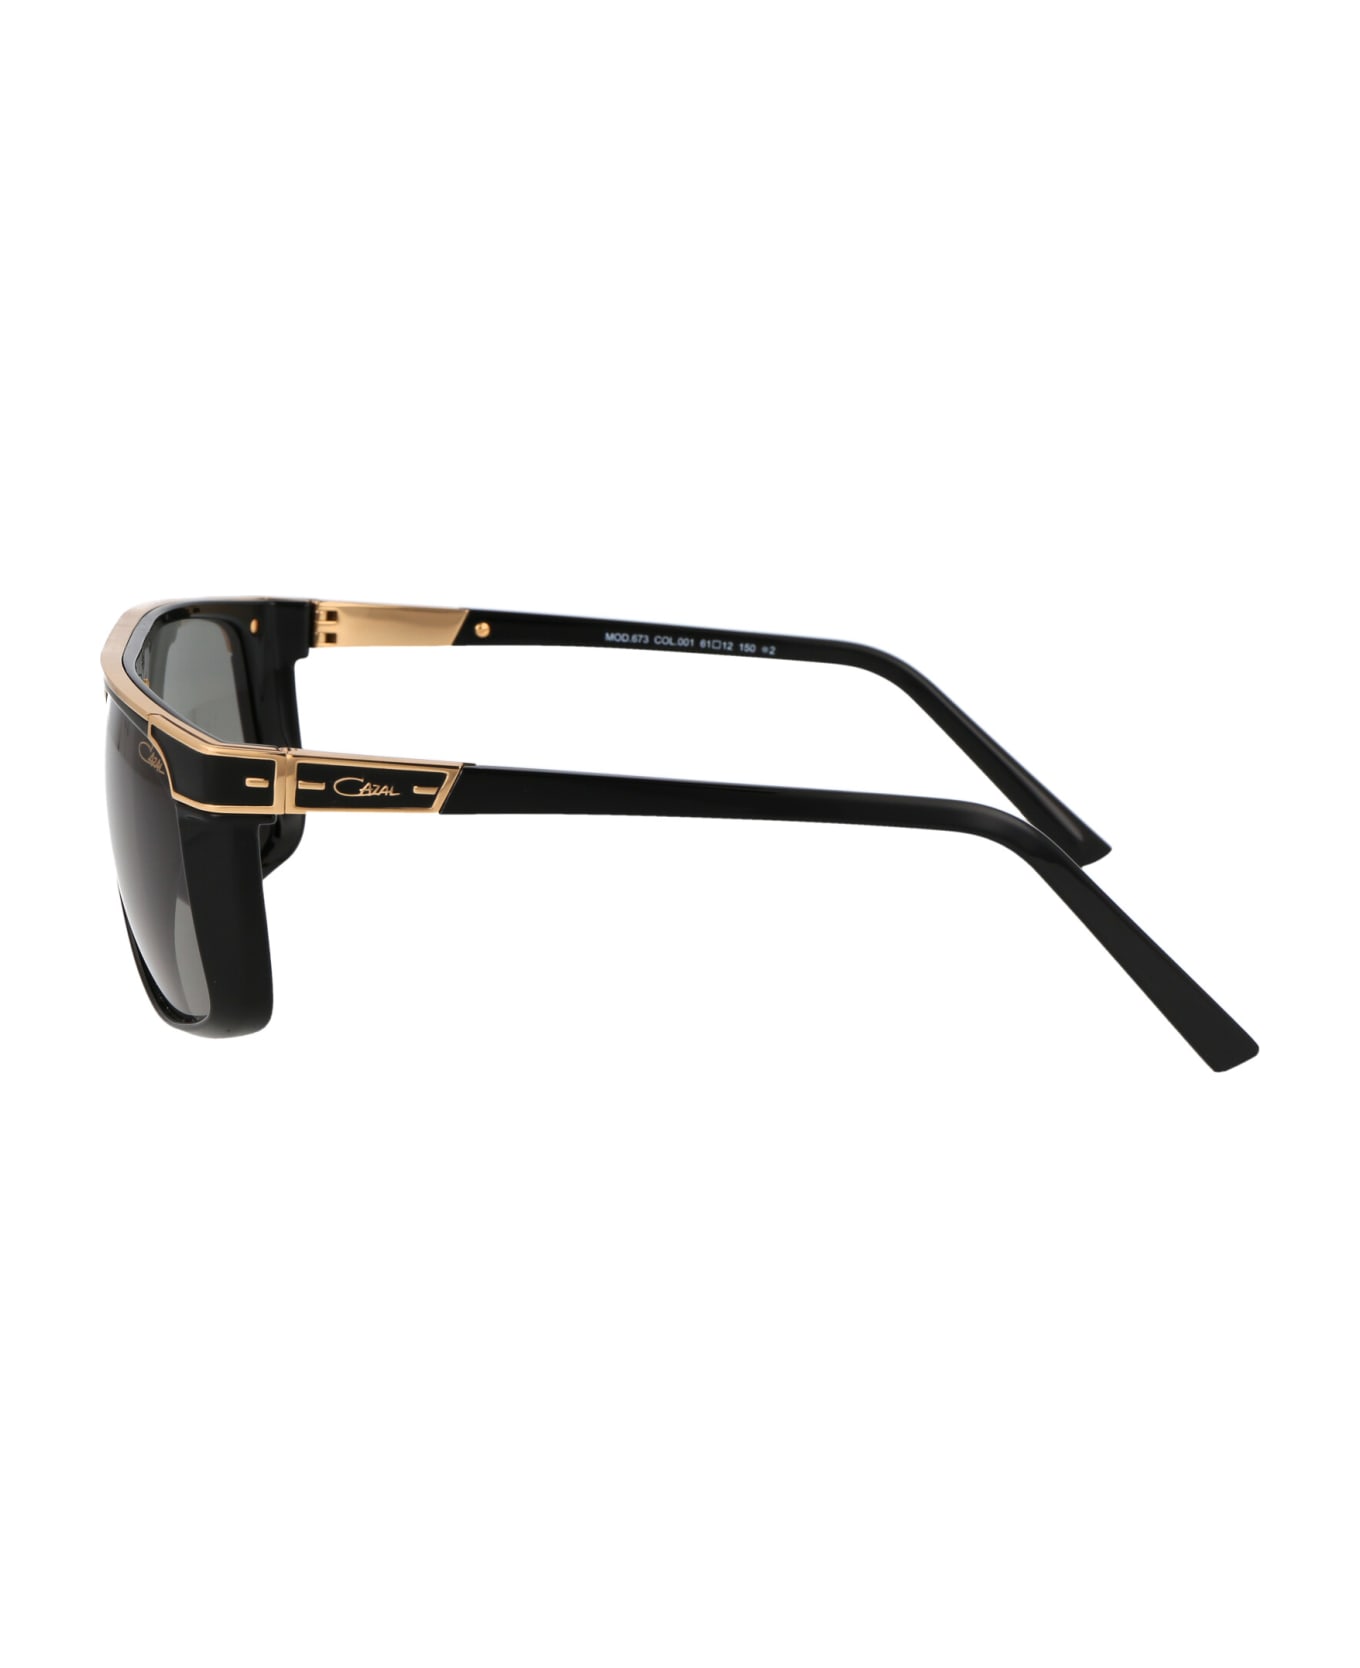 Cazal Mod. 673 Sunglasses - 001 BLACK サングラス